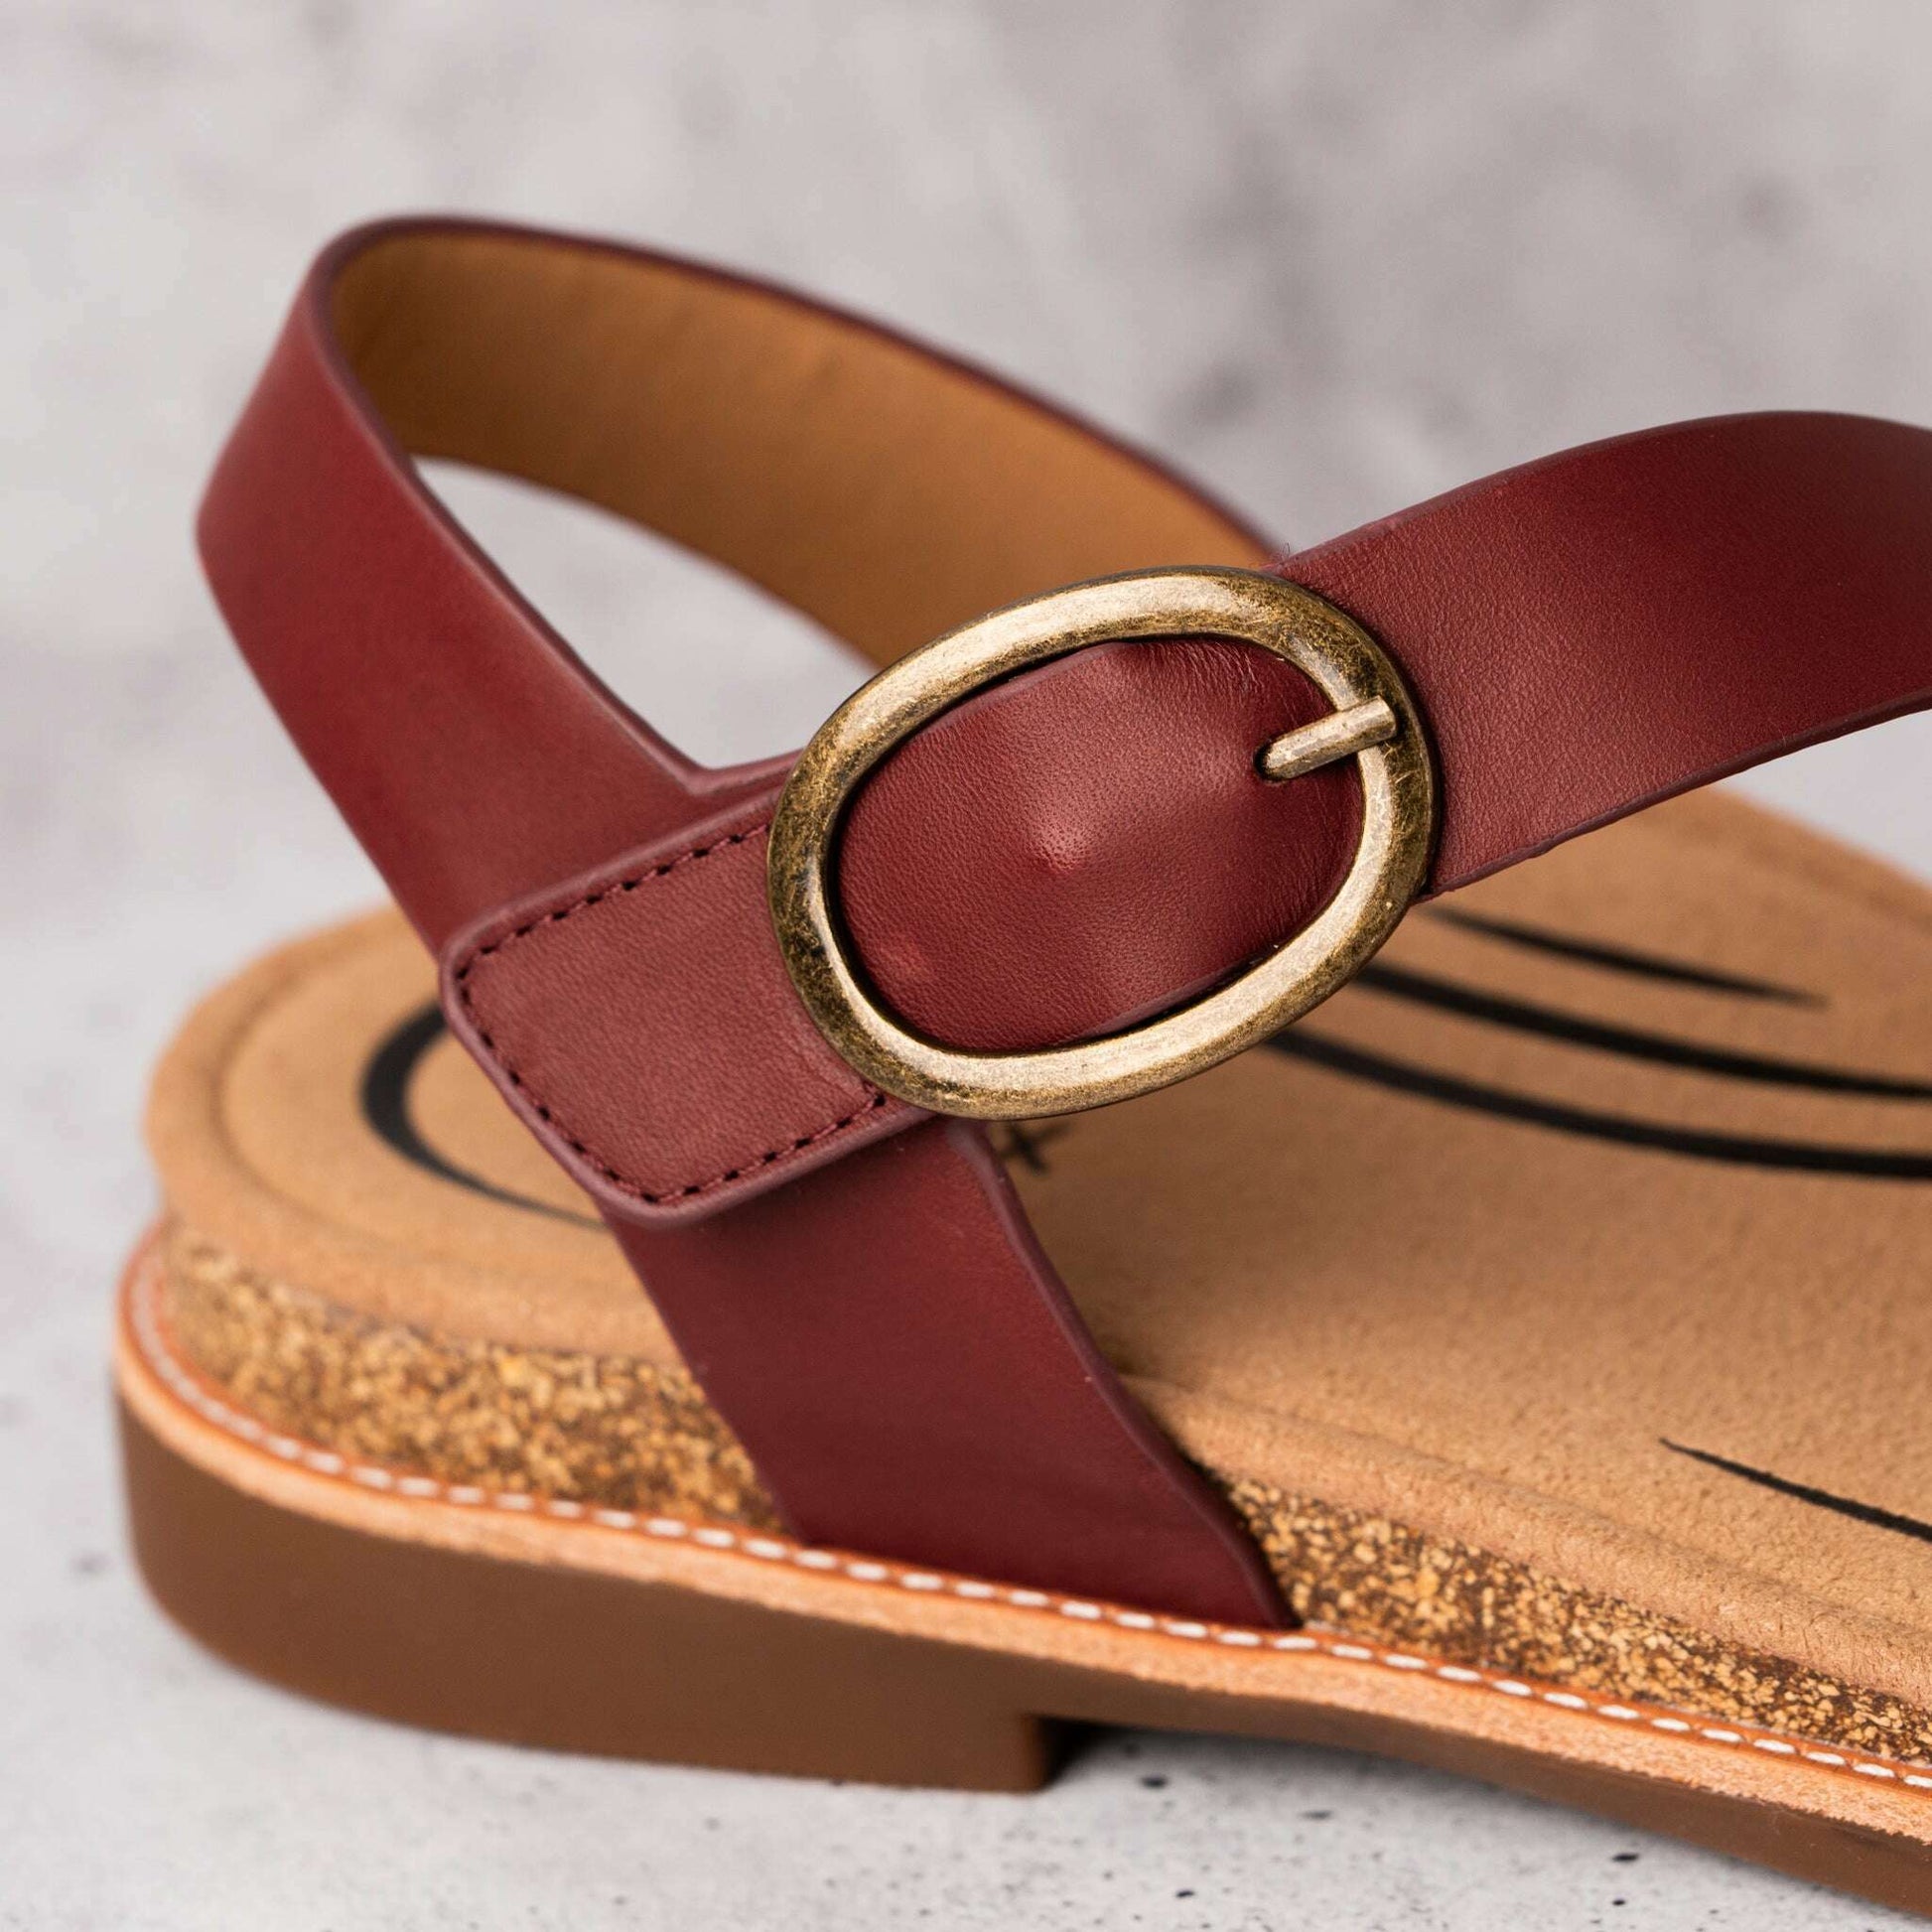 Aetrex - Tamara - Black & Red Leather, Sandals, AETREX, Plum Bottom